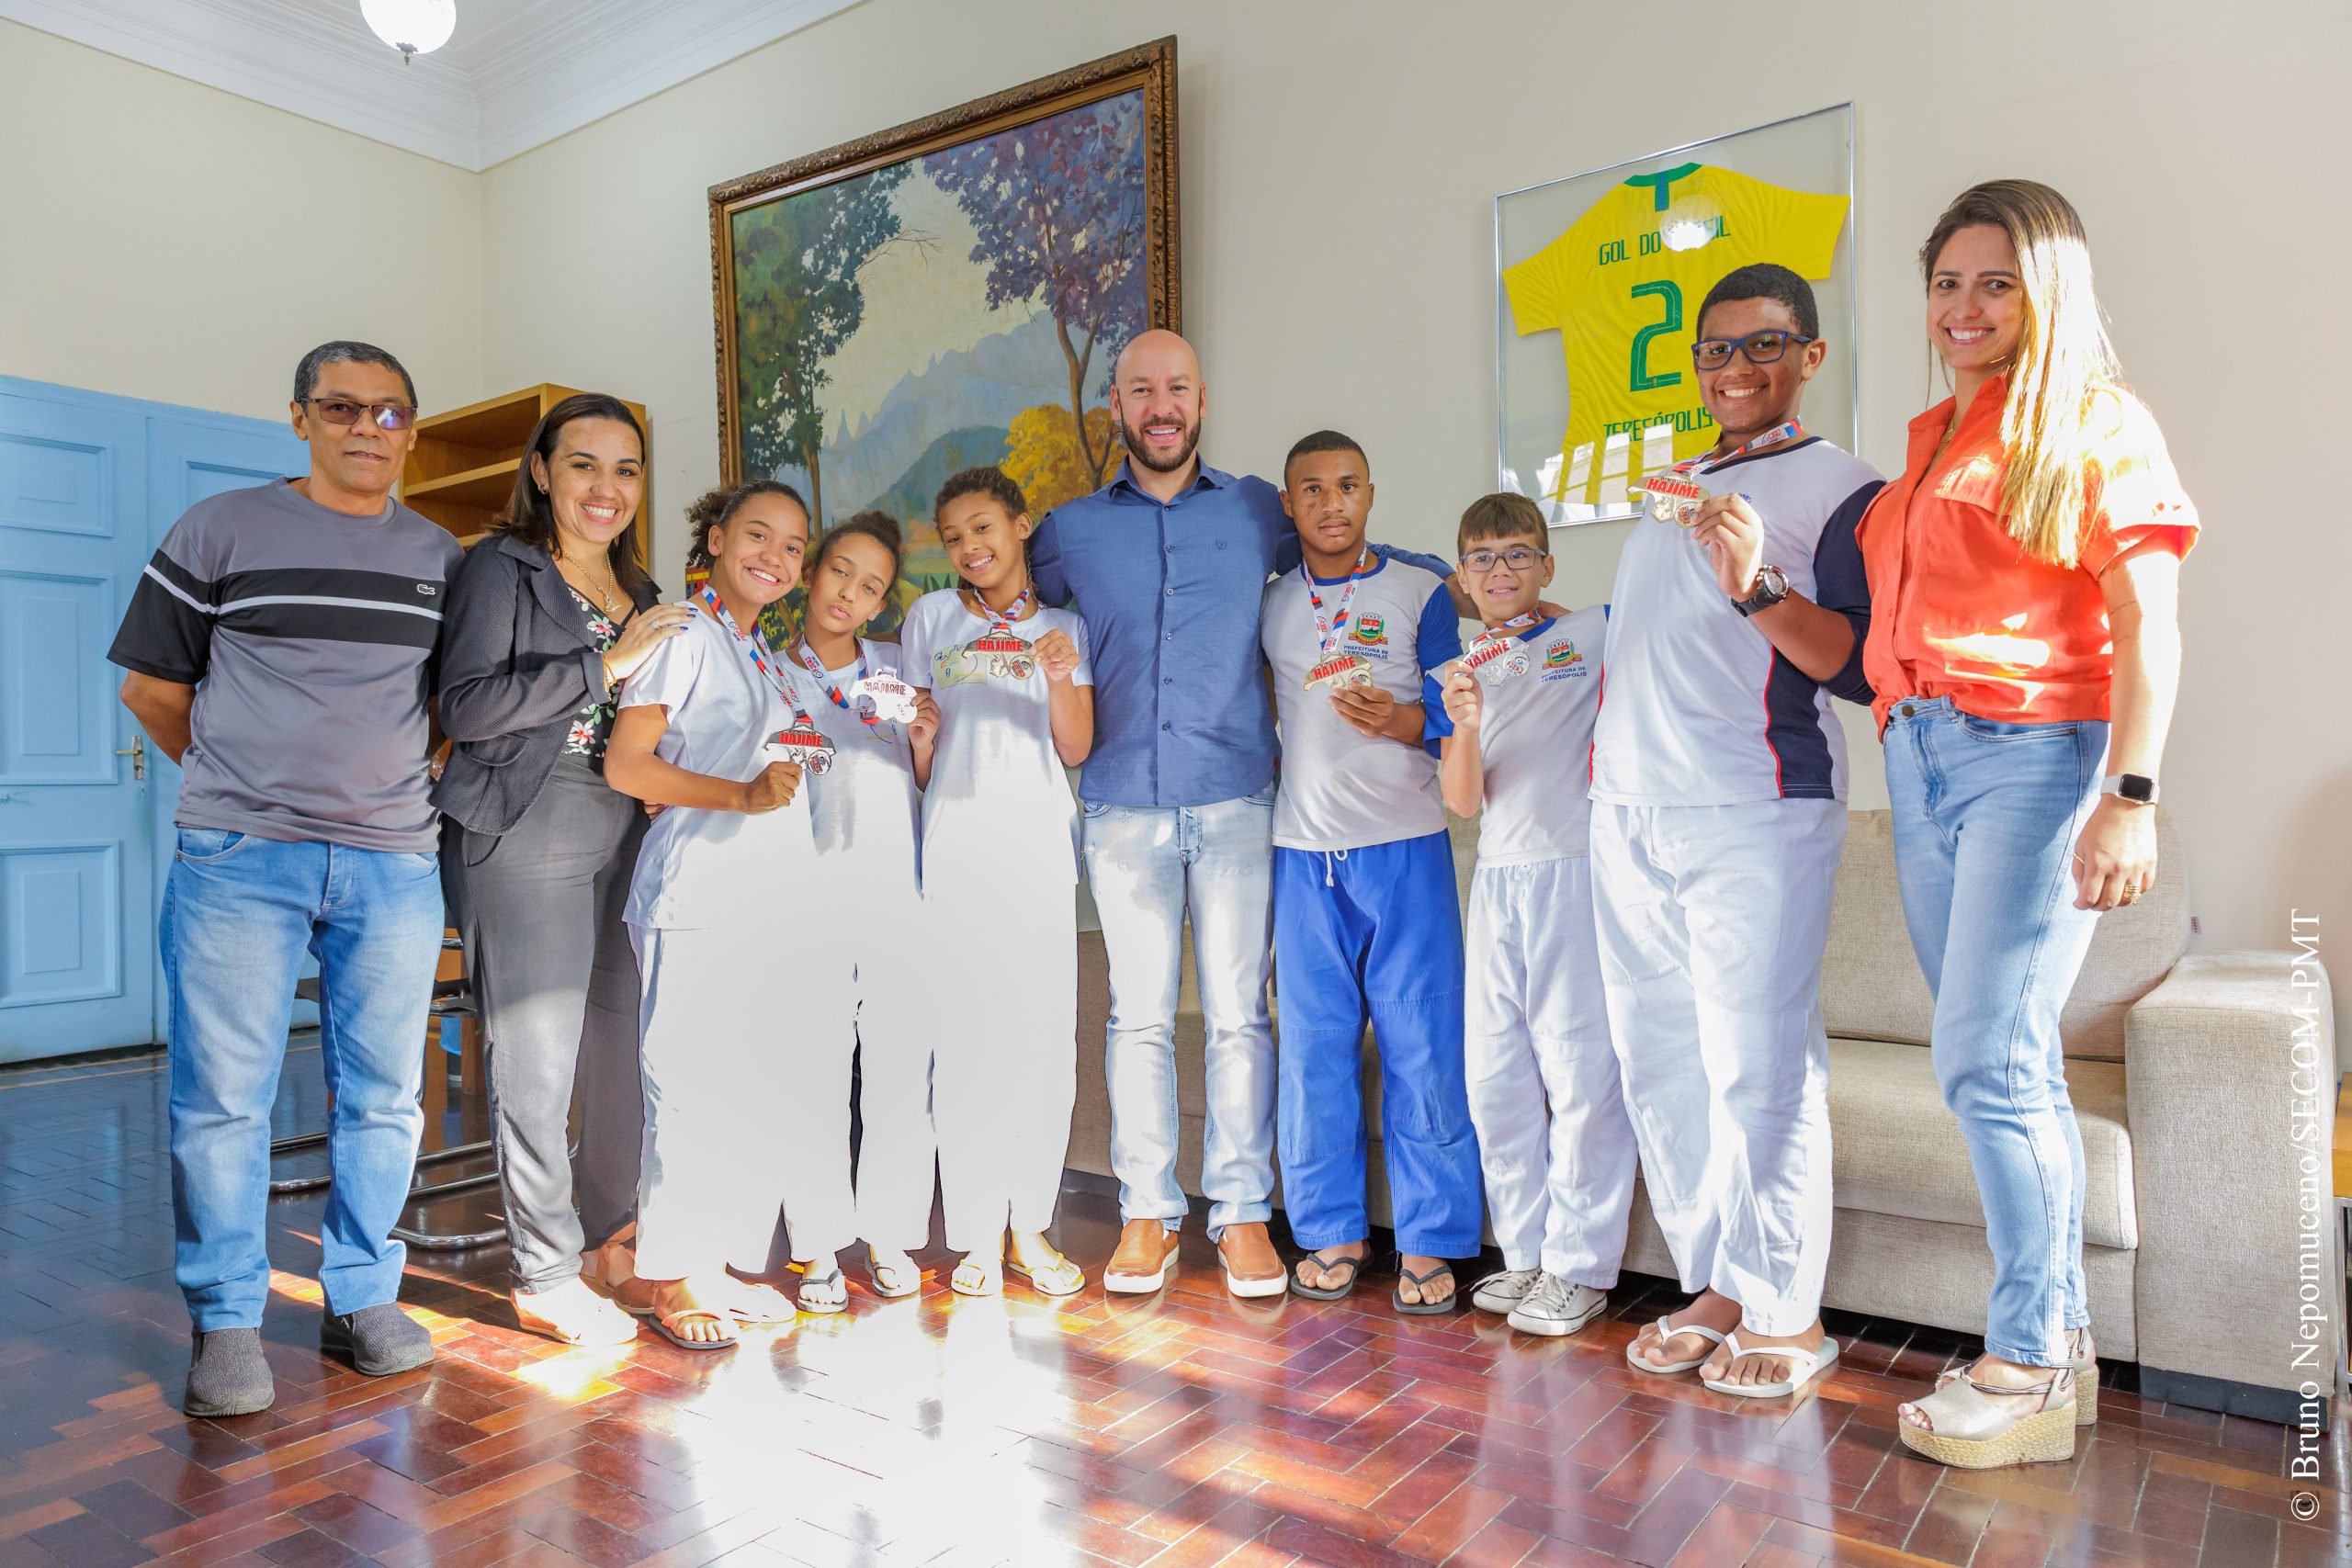 Prefeito de Teresópolis recebe alunos da rede municipal de ensino, medalhistas em etapa estadual de judô